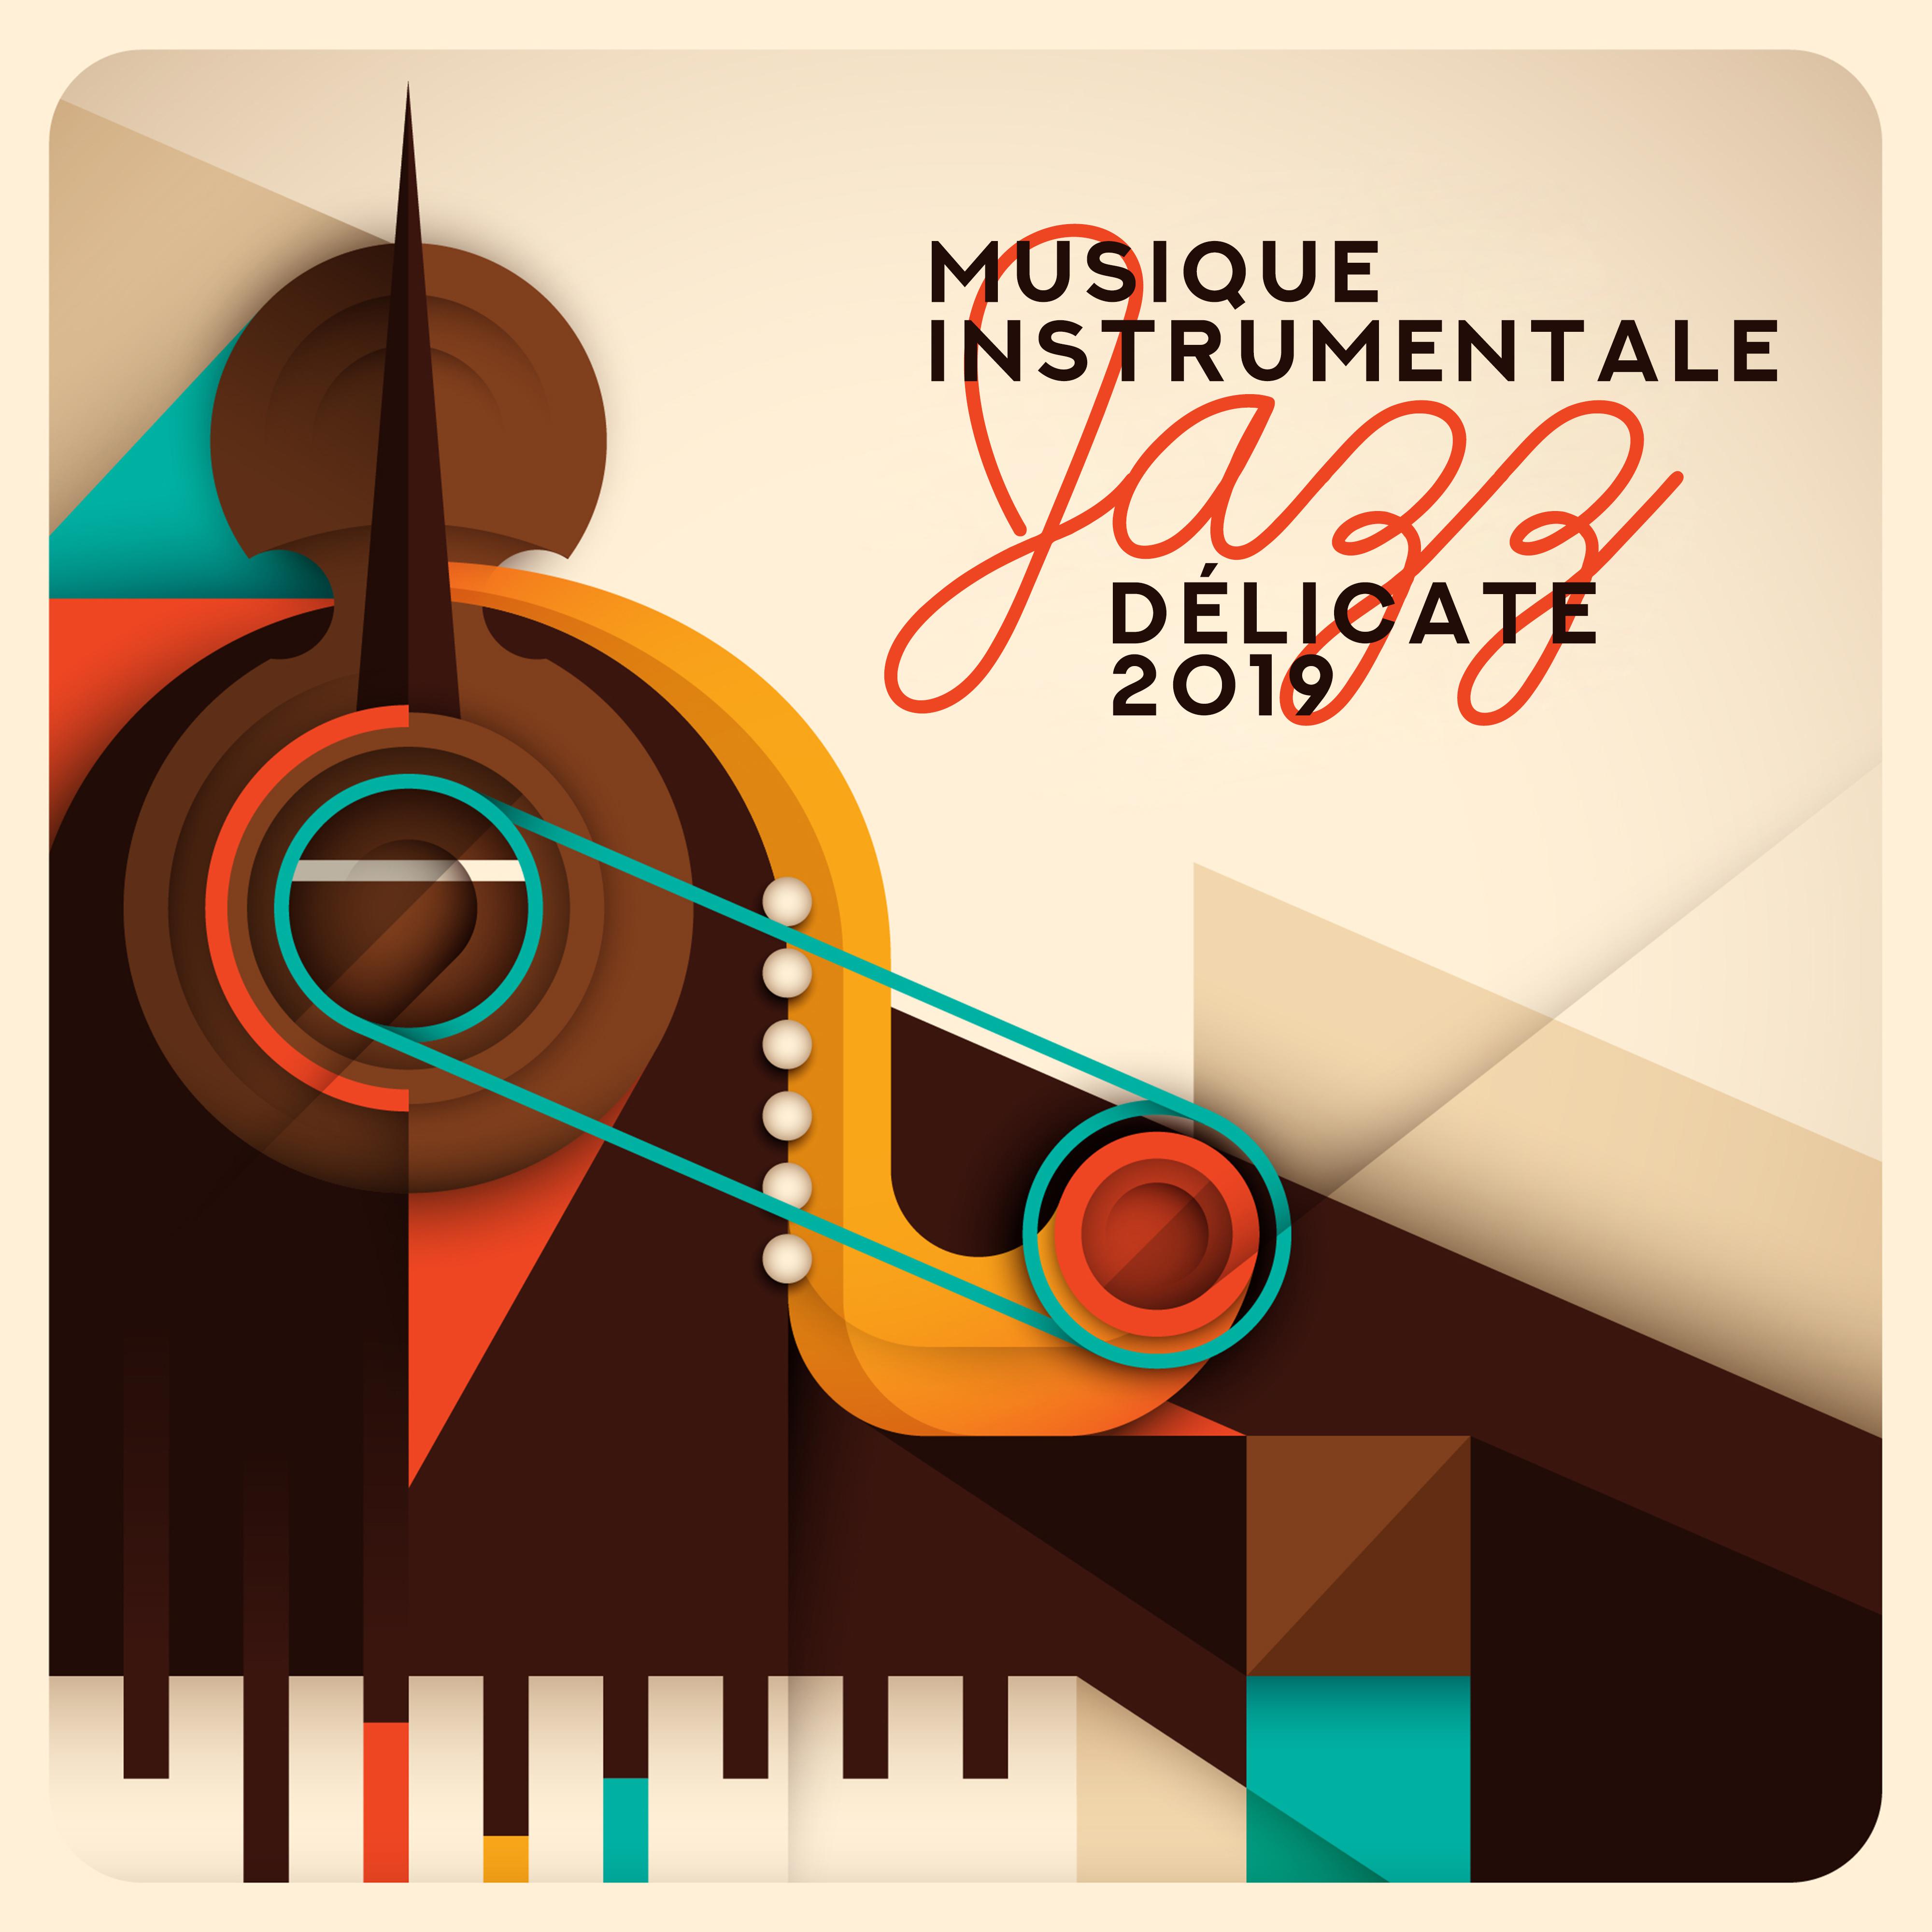 Musique Instrumentale Jazz De licate 2019